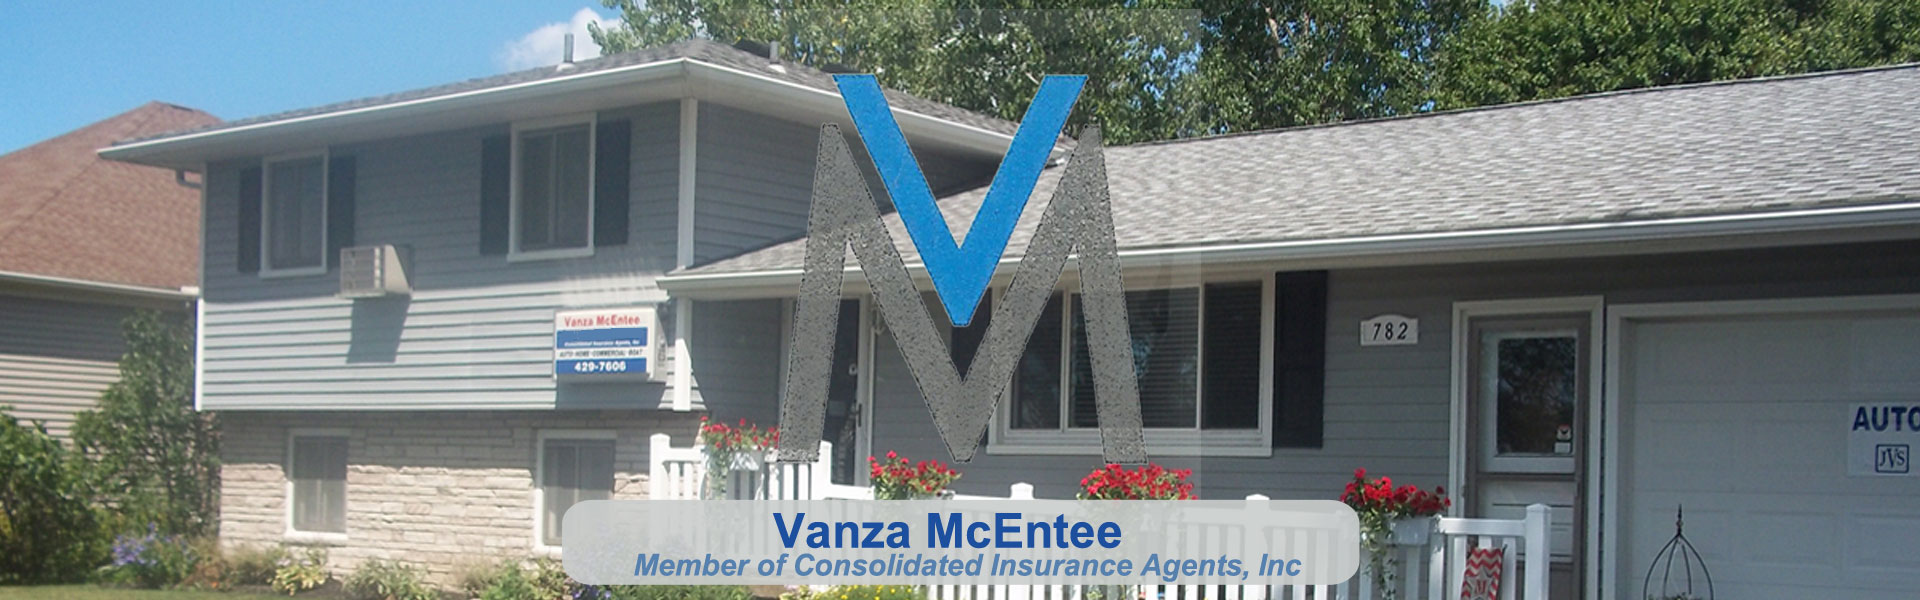 Vanza McEntee Insurance Agency